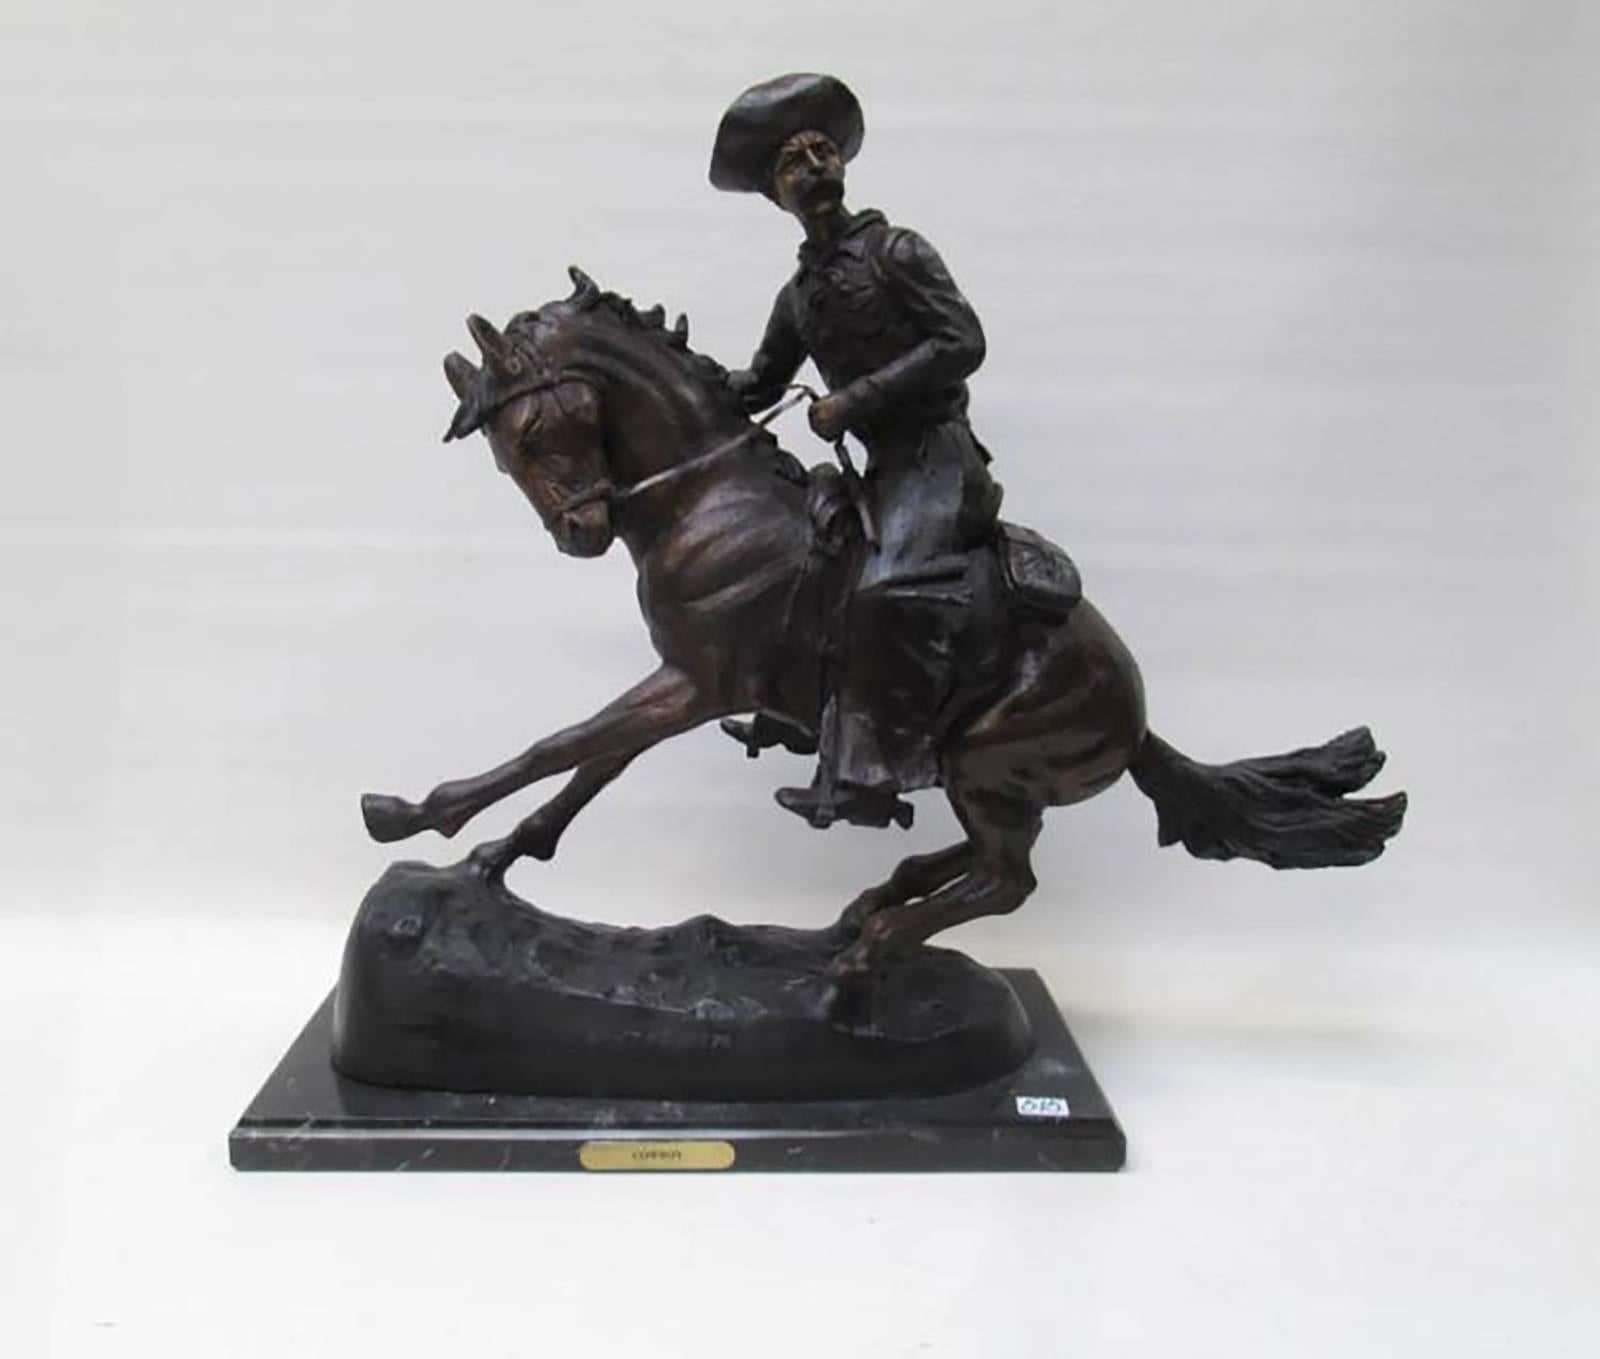 (after) Frederic Remington Figurative Sculpture - Large Bronze Sculpture After Frederic Remington Entitled “The Cowboy”